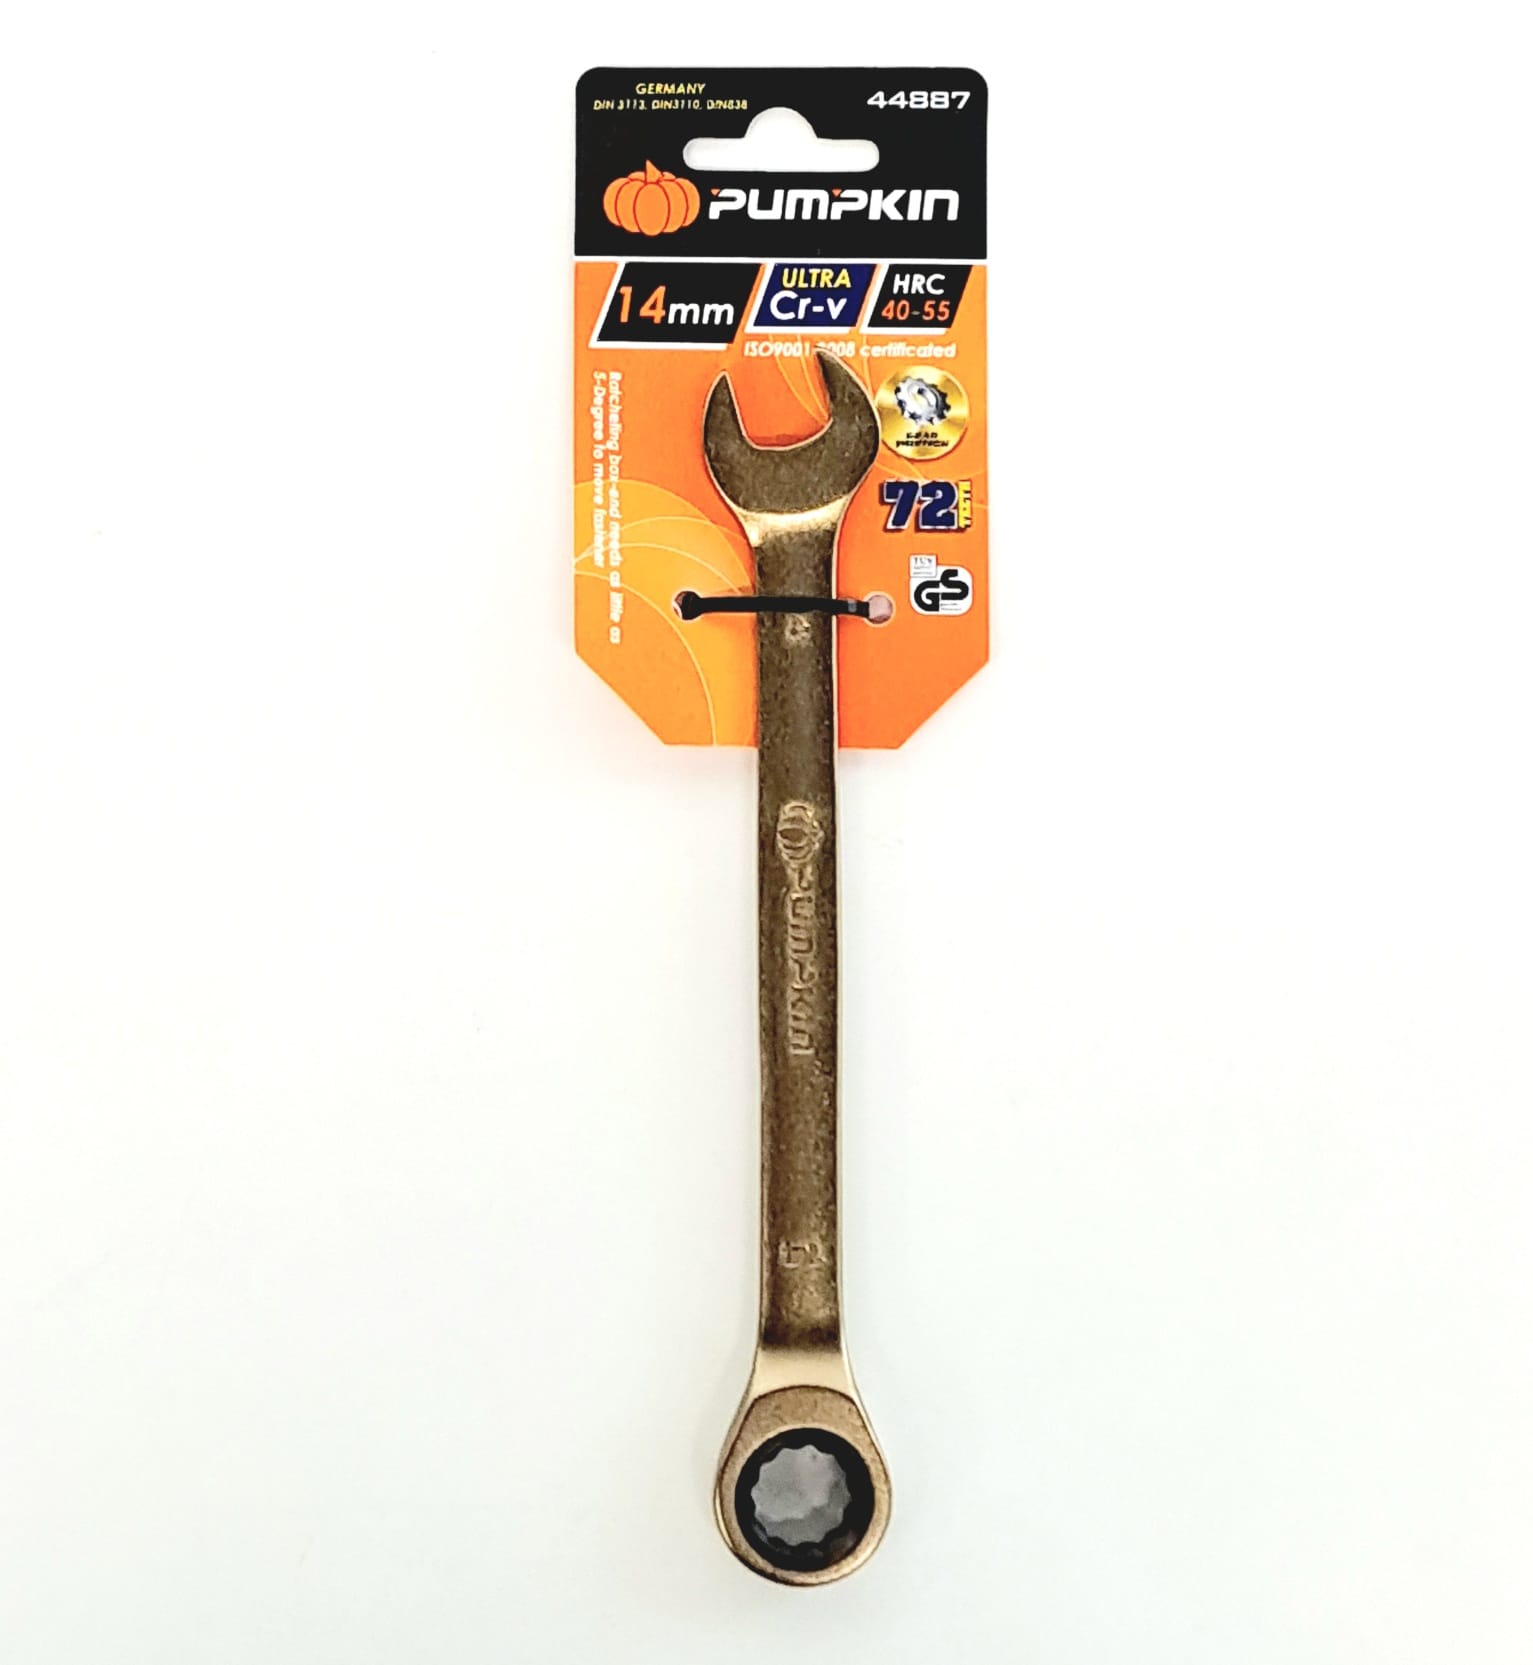 Pumpkin 44887 Ultra Cr-V 14mm Ratchet Wrench